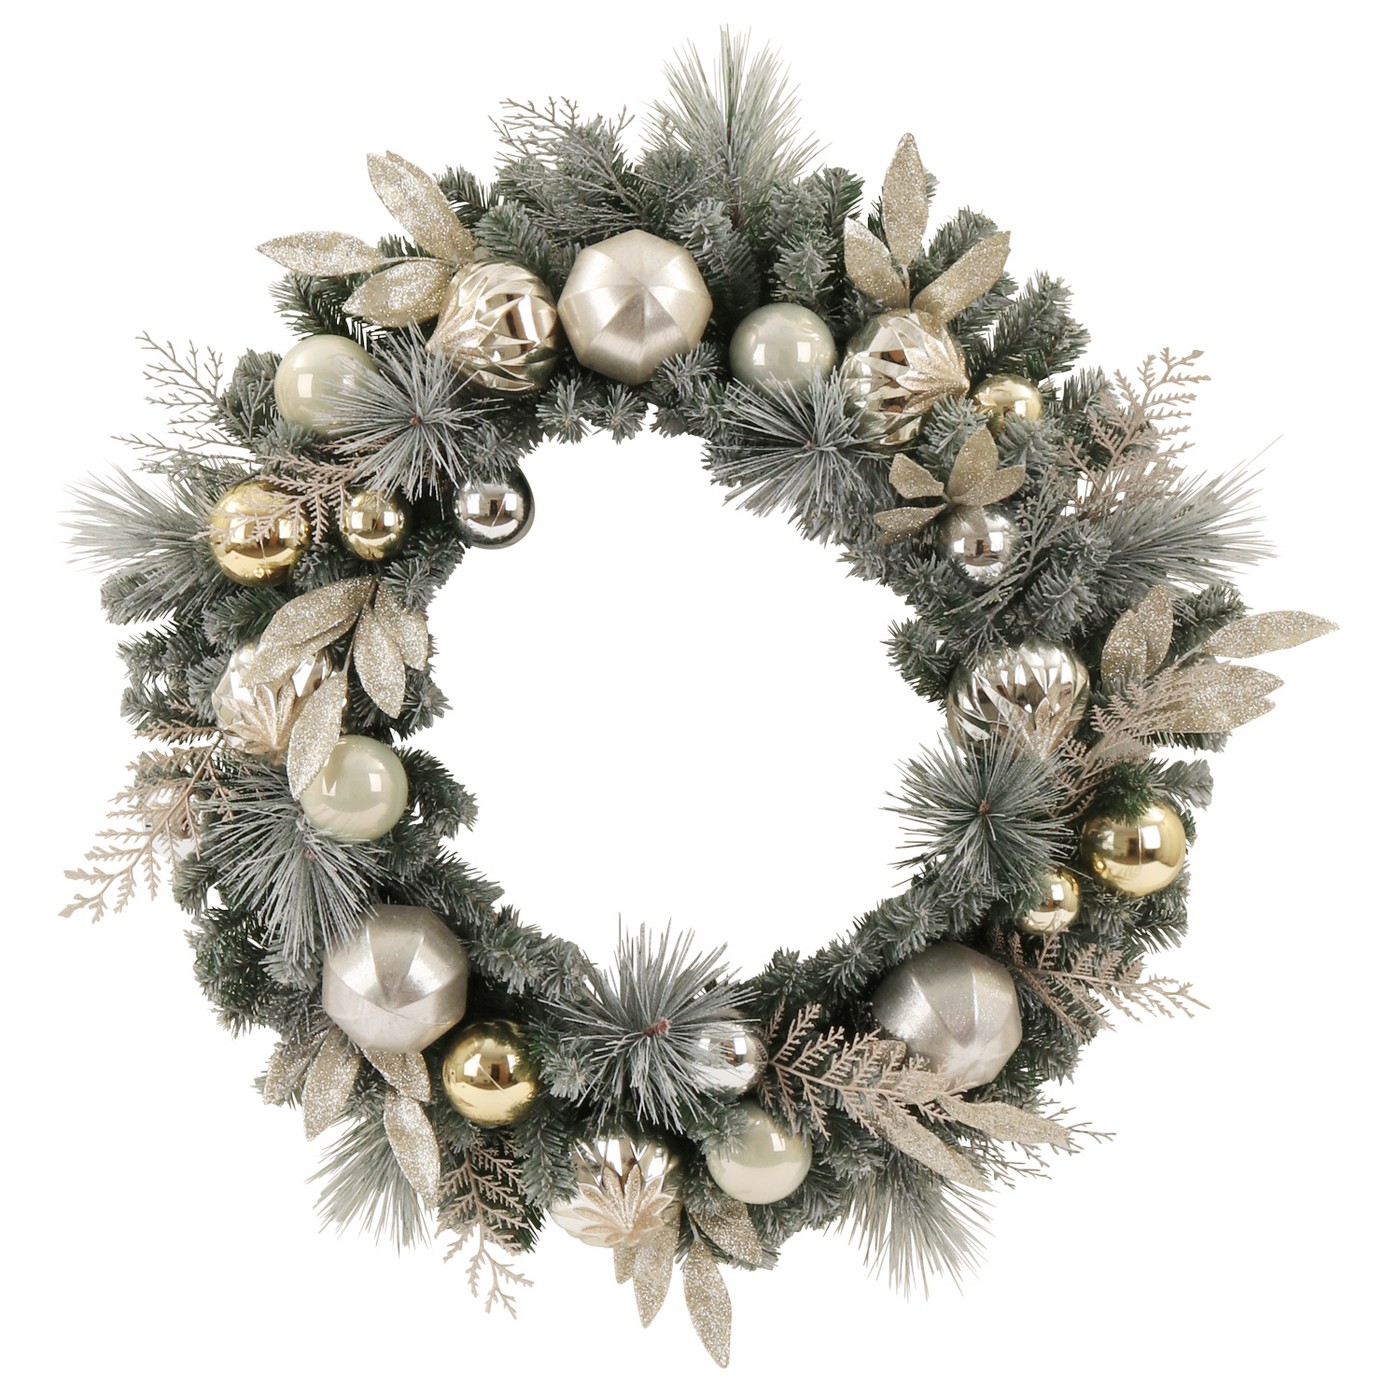 30" Christmas Unlit Metallic Glitter with Shiny Ornaments Artificial Pine Wreath - Wondershopâ¢ - image 1 of 2